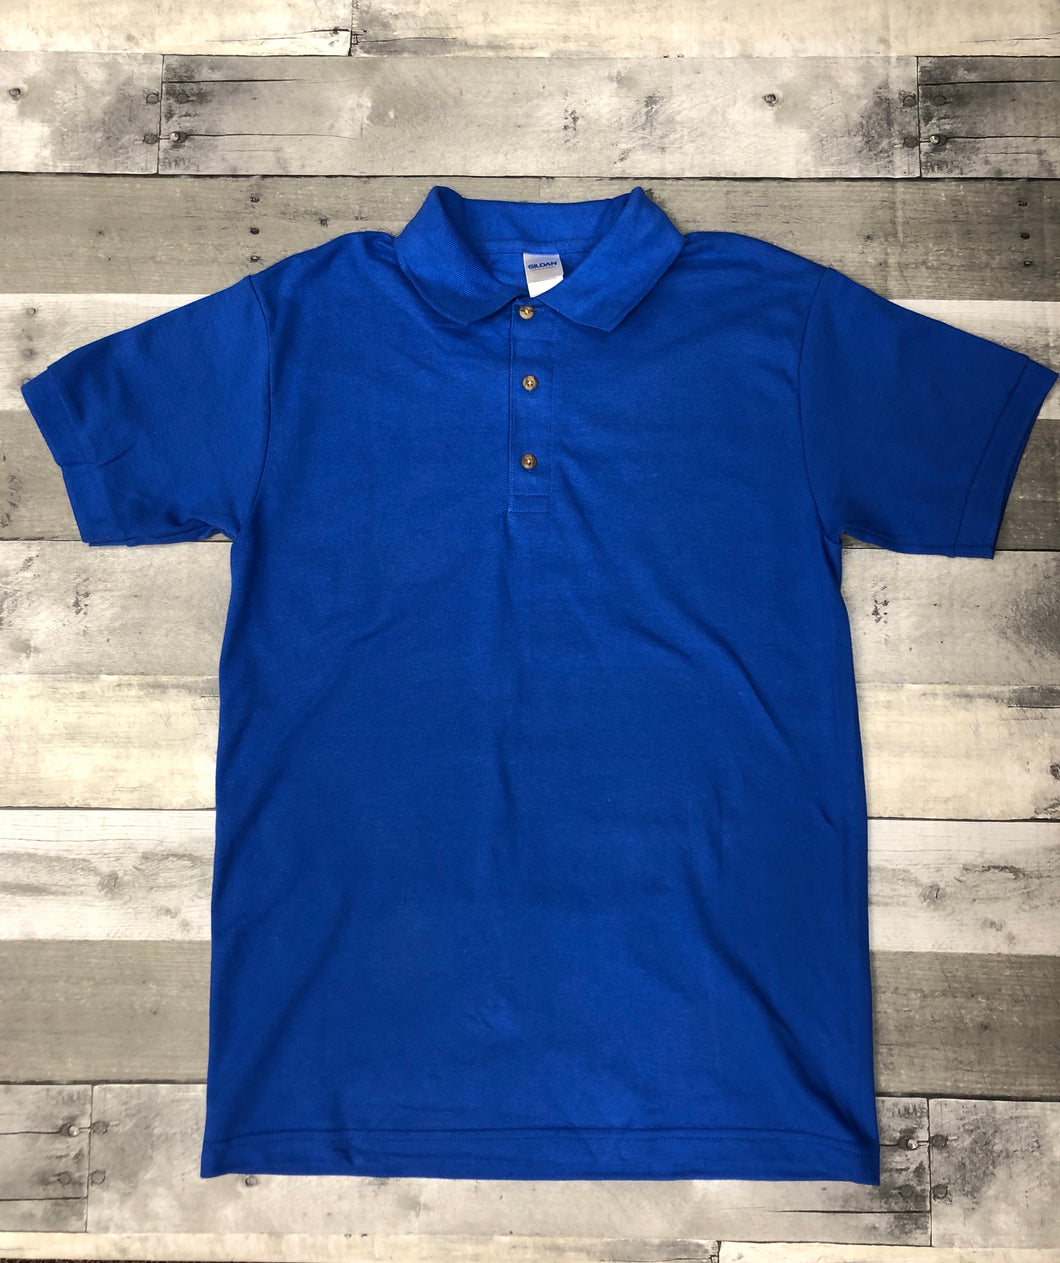 Adult - Ultra Pique Polo - Short Sleeve - Royal Blue (Duke) - SM - New